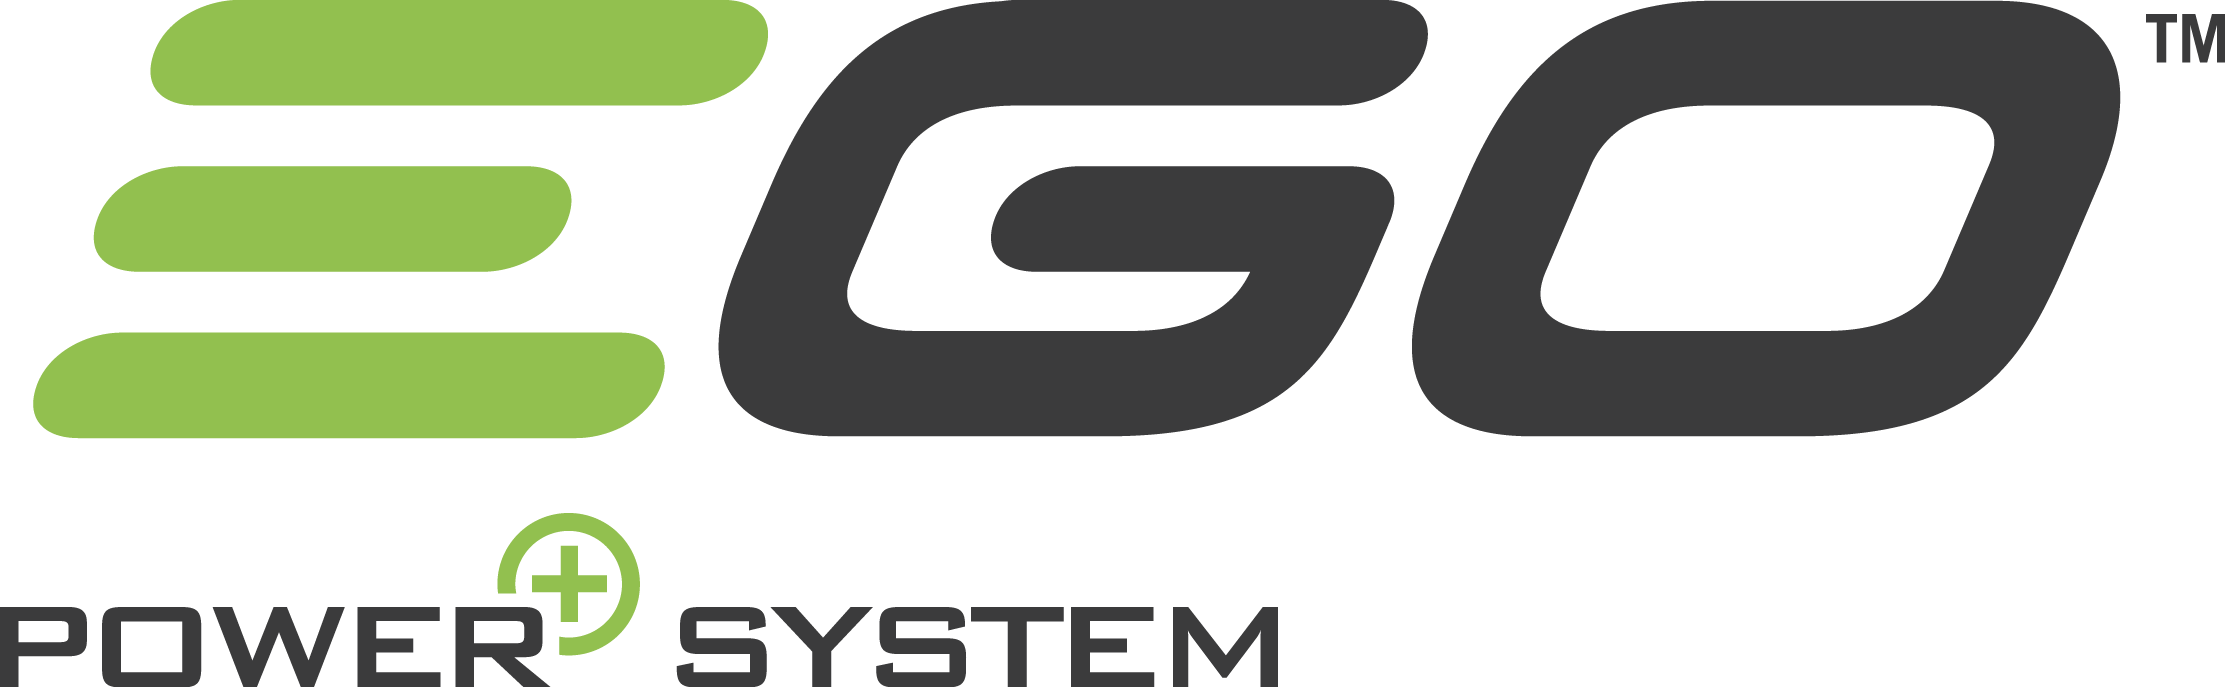 EGO_PWRPLUS_System_TM.png